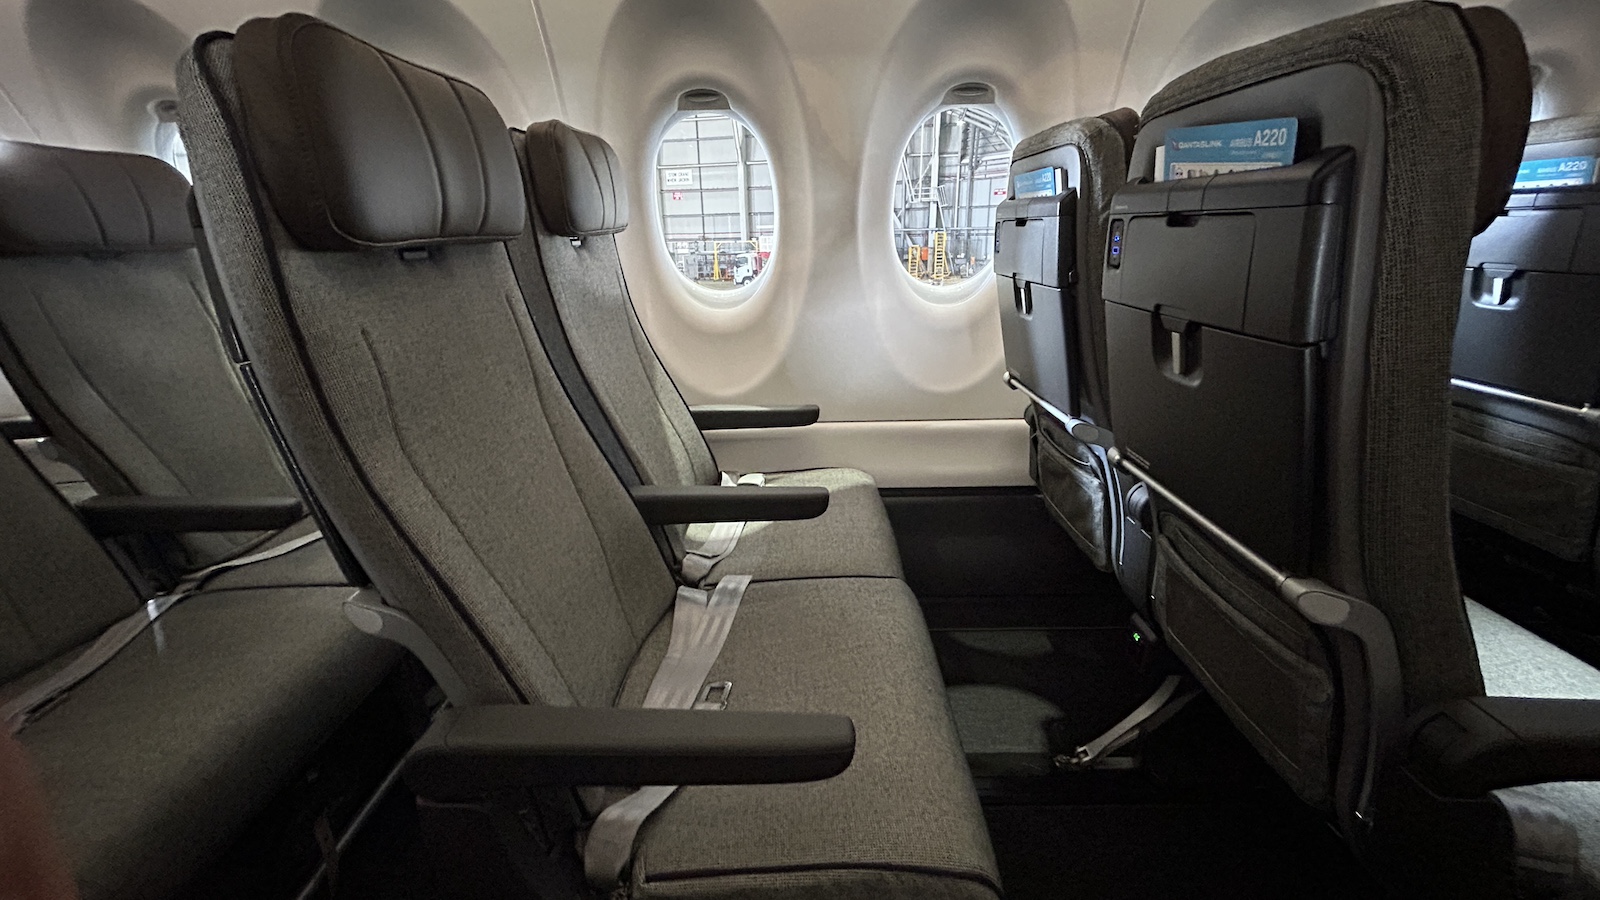 Qantaslink A220 Economy Class Fabric Seats Side View 2 Seats Point Hacks by Daniel Sciberras